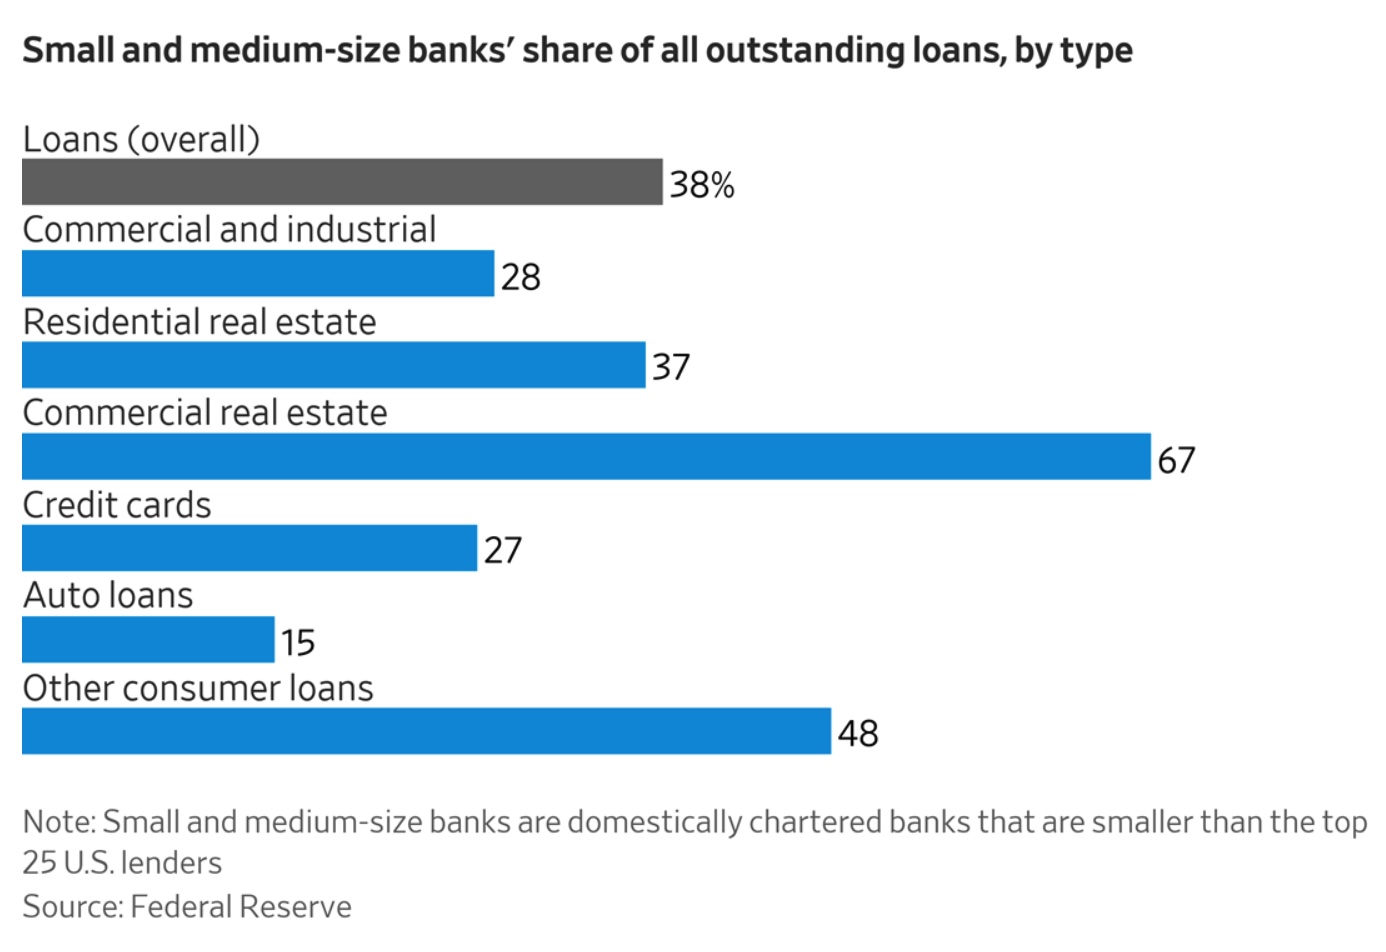 Smaller banks